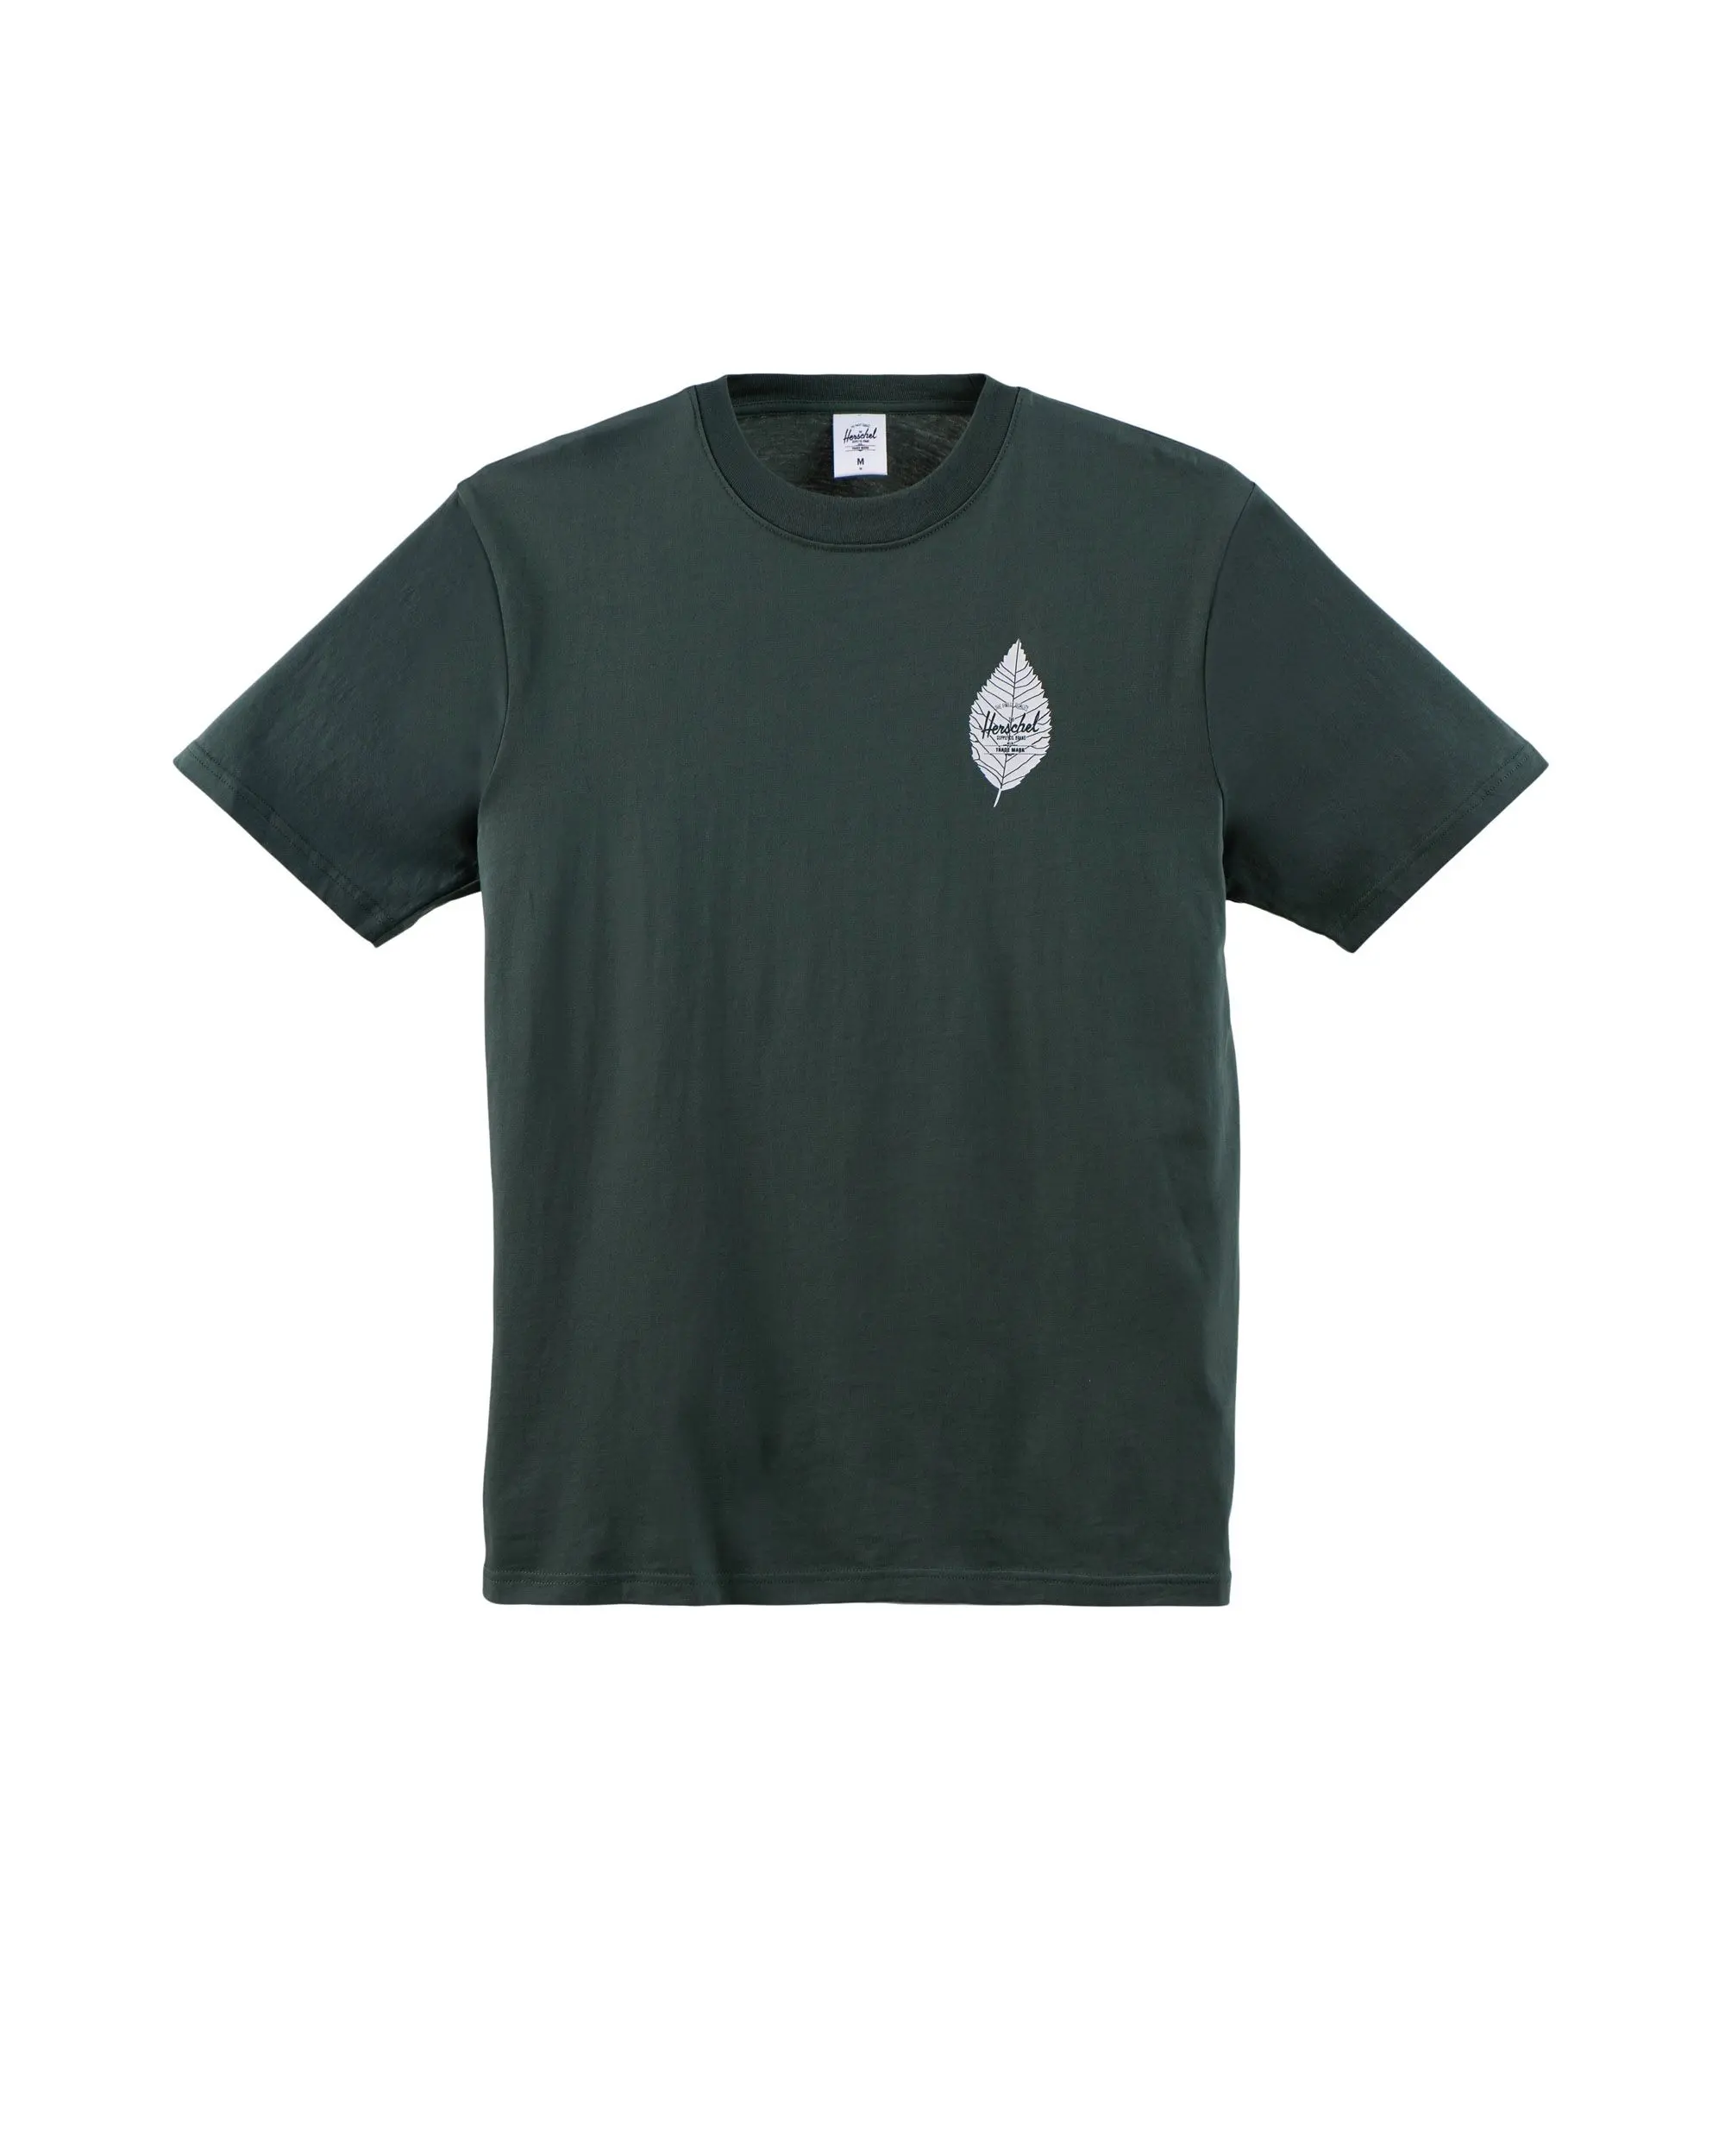 Betsy Trotwood Ja hydrogen Logo Tee Shirt | Herschel Supply Co.